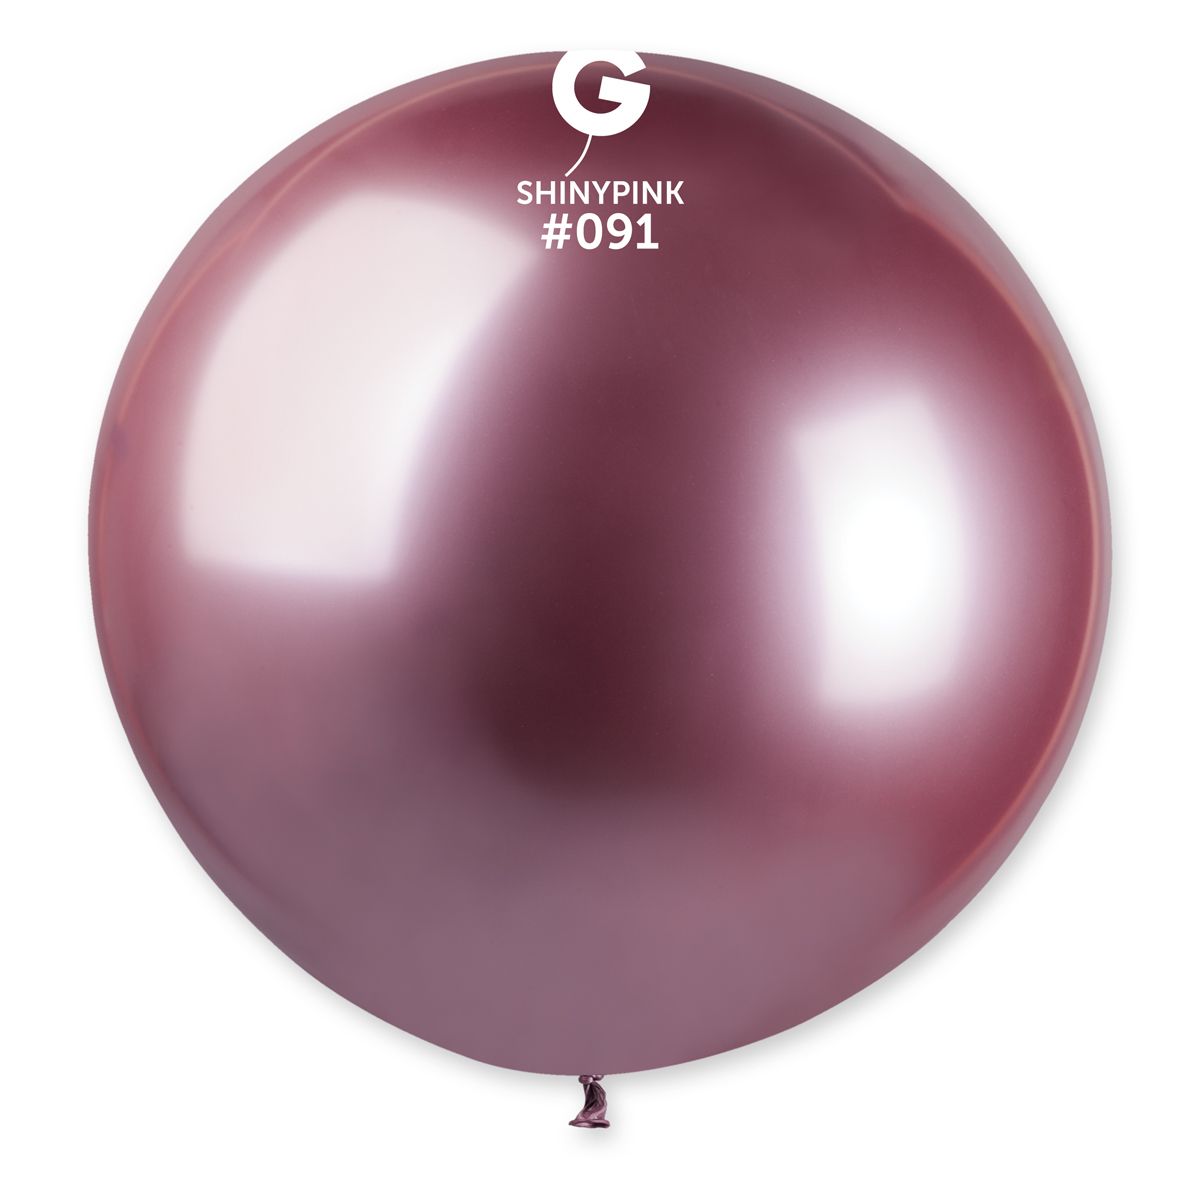 G-30” Shiny Pink #091